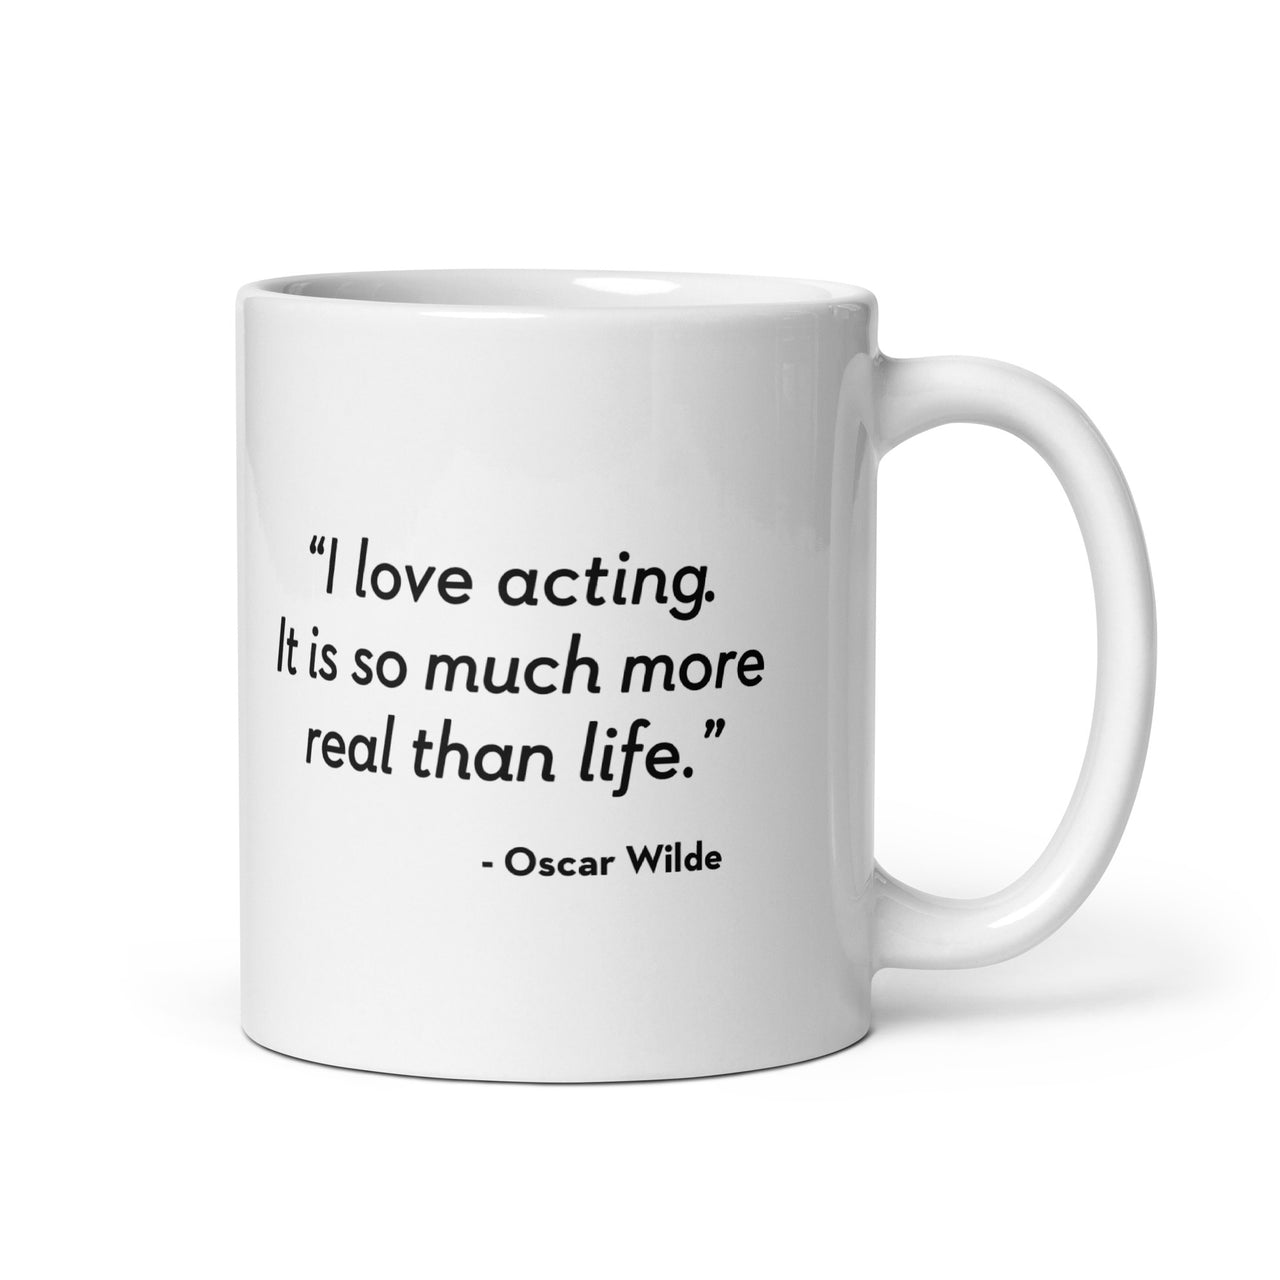 NYFA Mug with Oscar Wilde Quote - White